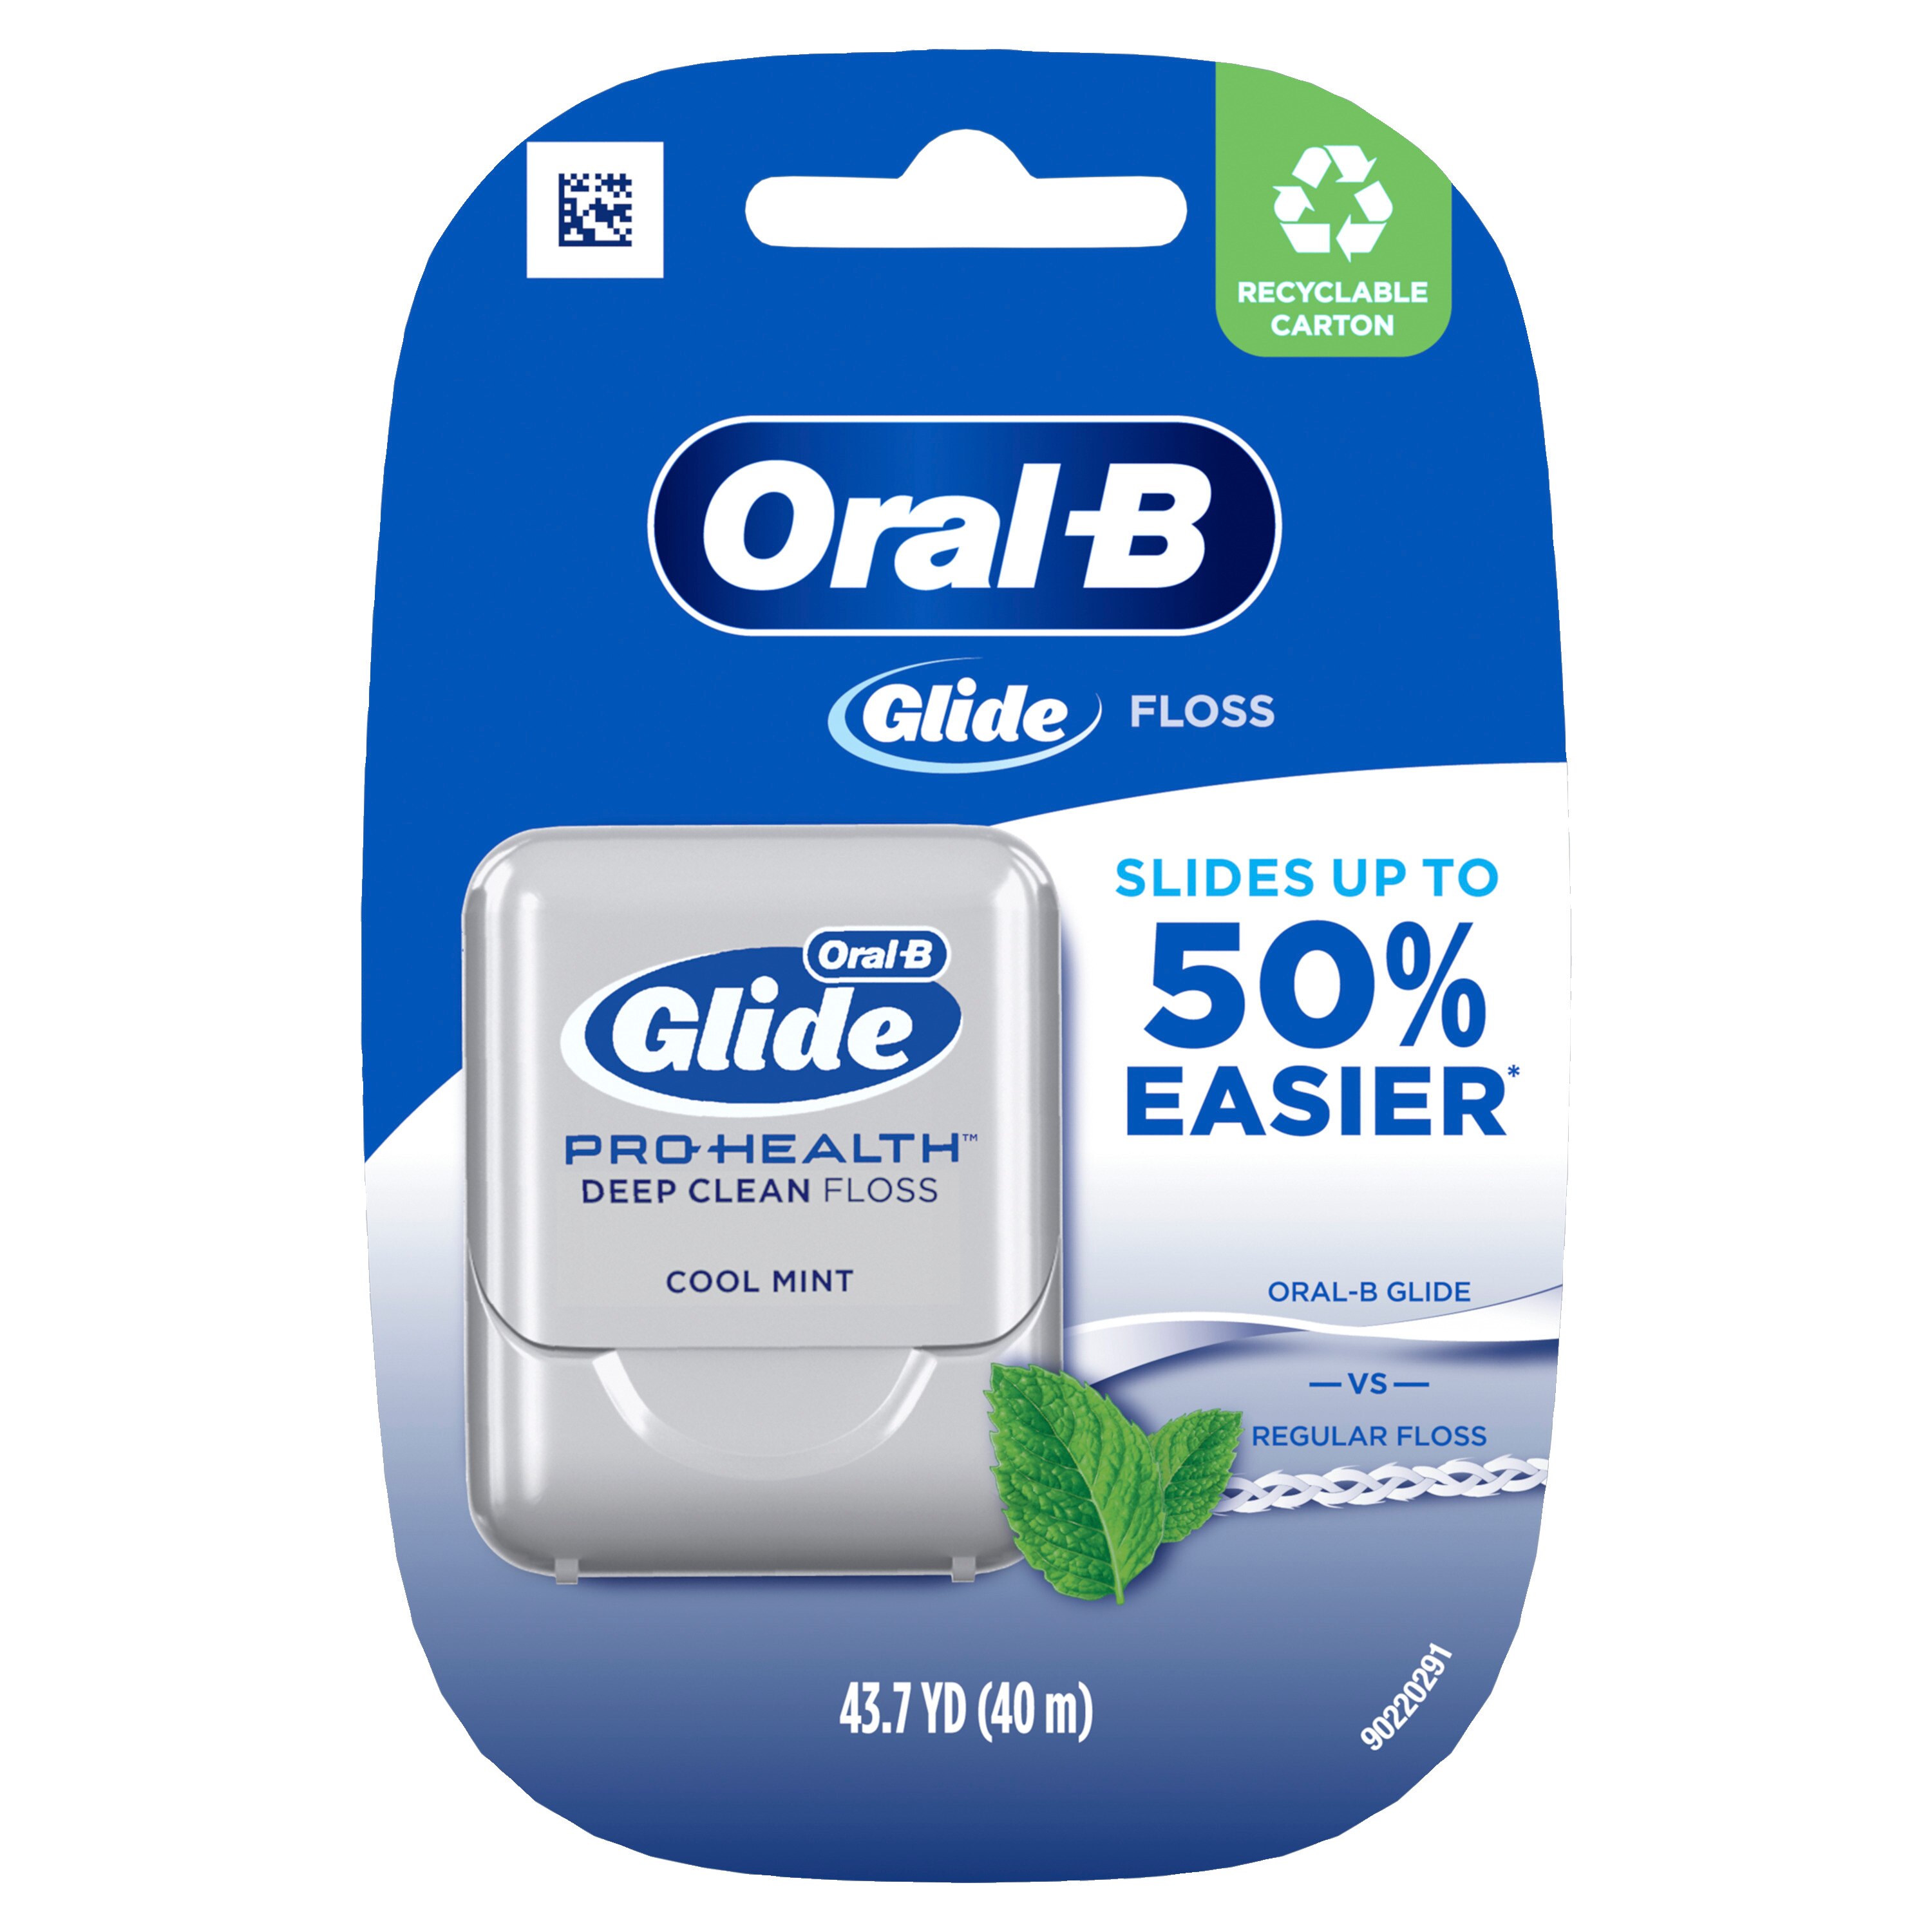 Oral-B Glide Pro-Health Deep Clean Floss, Cool Mint, 40 M - 43.7 Yd , CVS